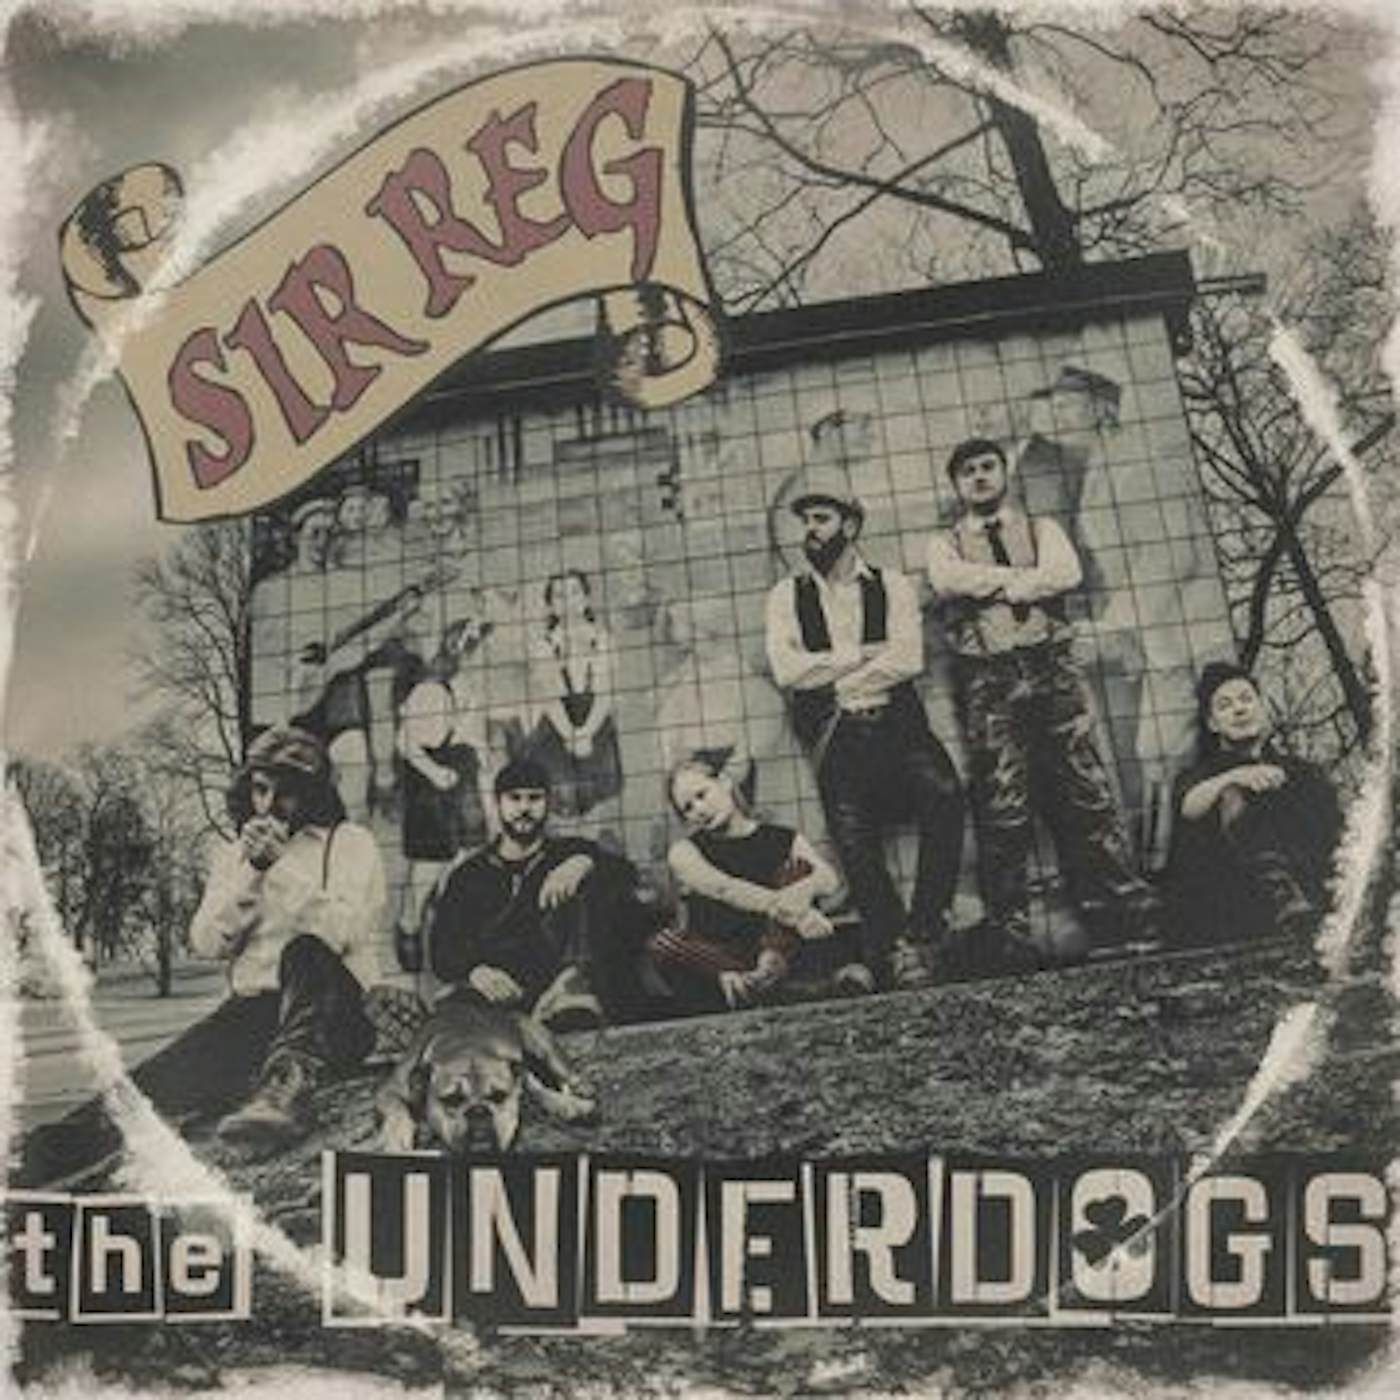 Sir Reg The underdogs Vinyl Record